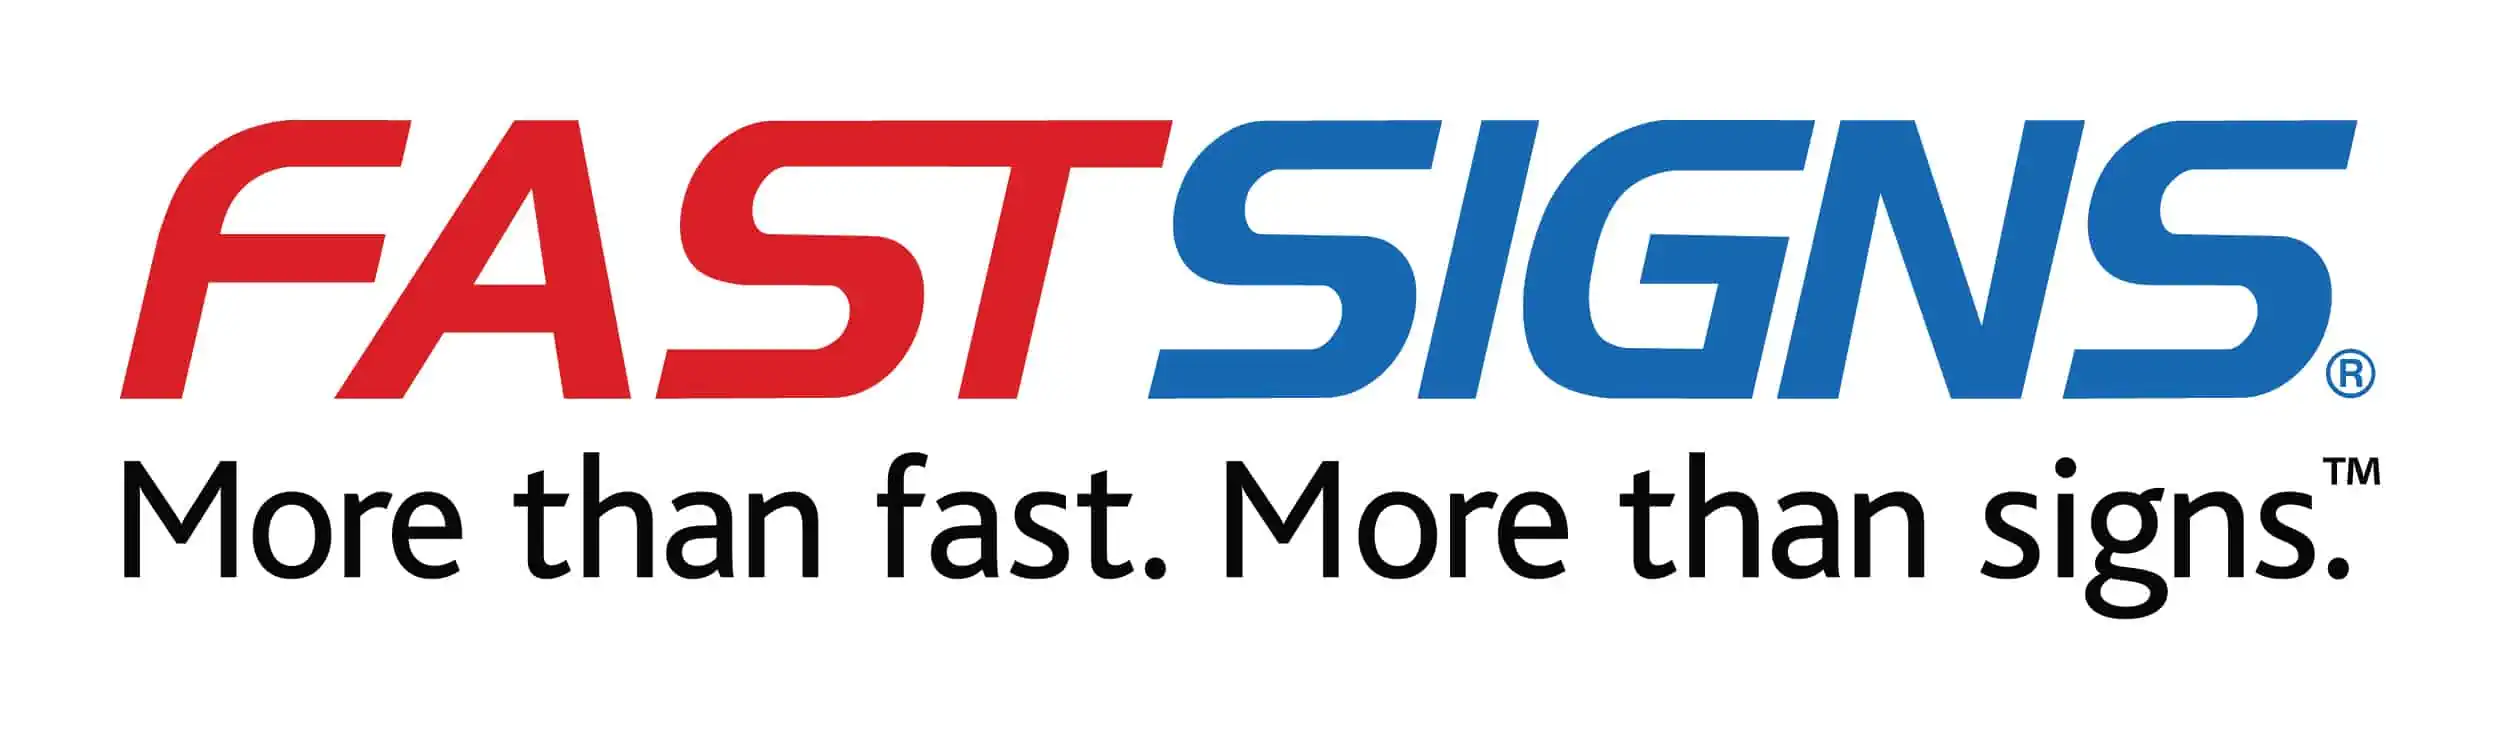 Fastsigns Logo